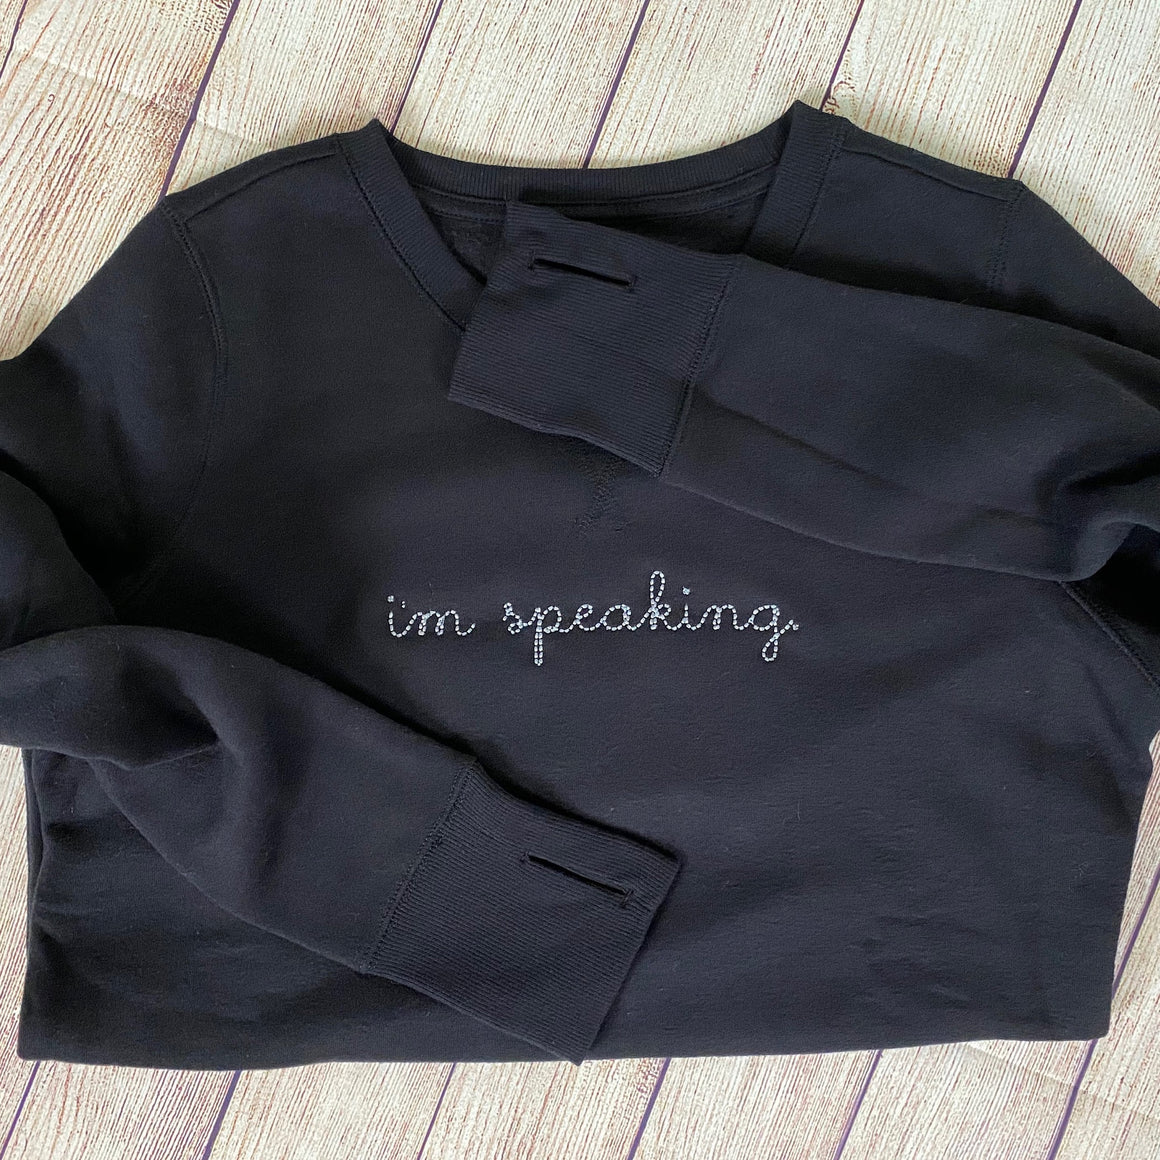 I’m speaking sweatshirt